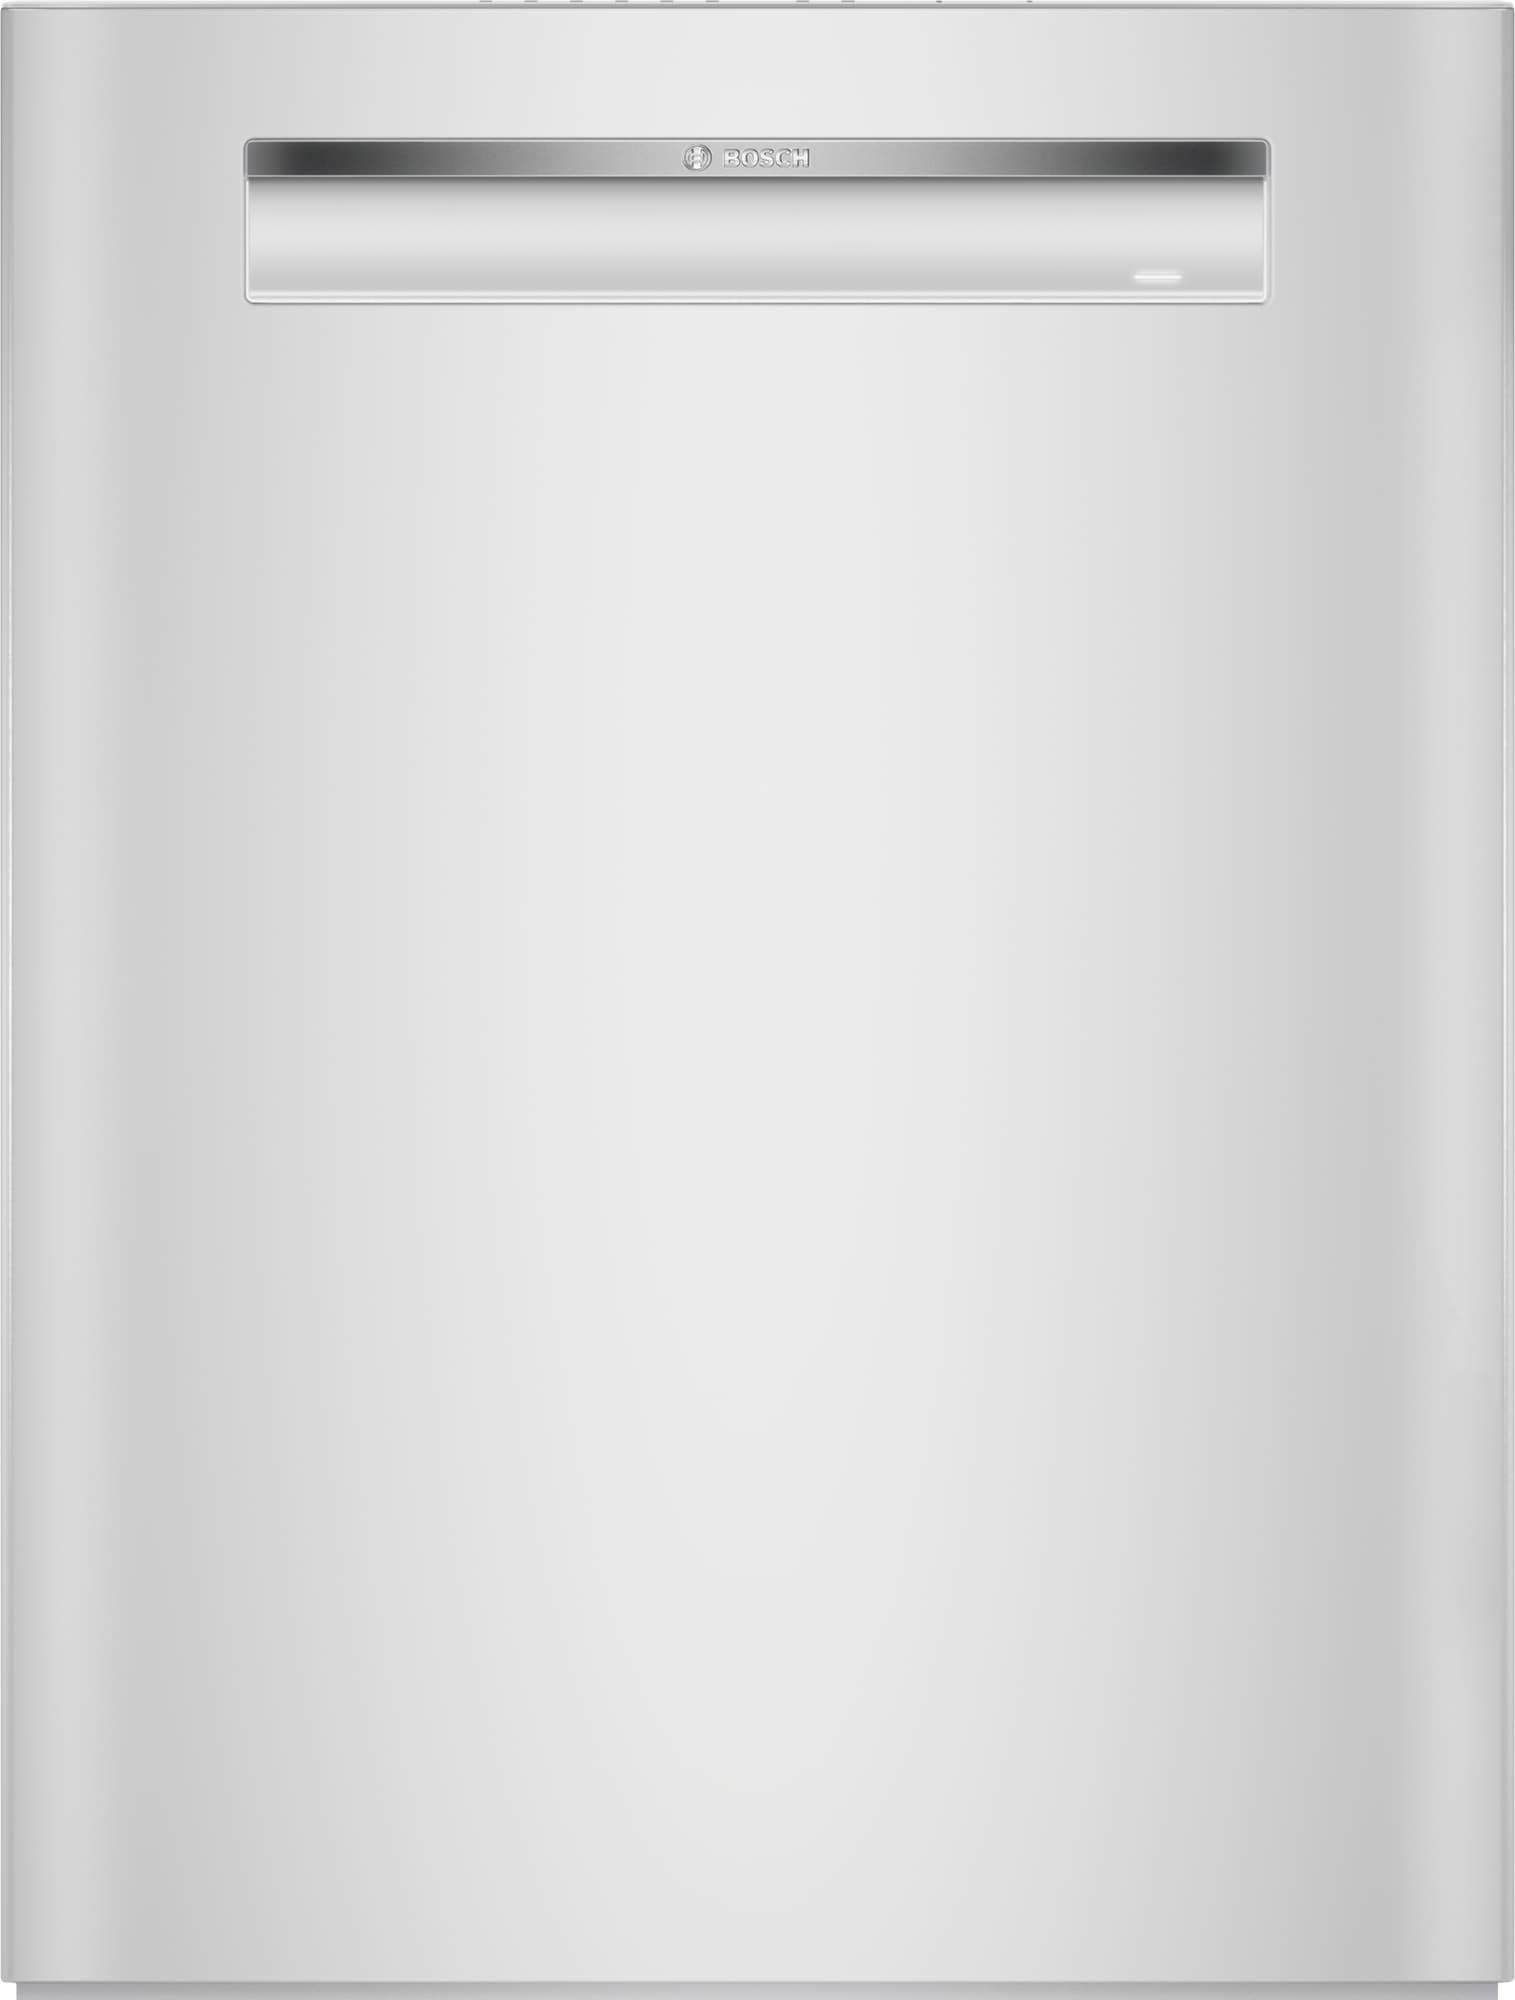 Bosch opvaskemaskine SMP4ECW79S (hvid)